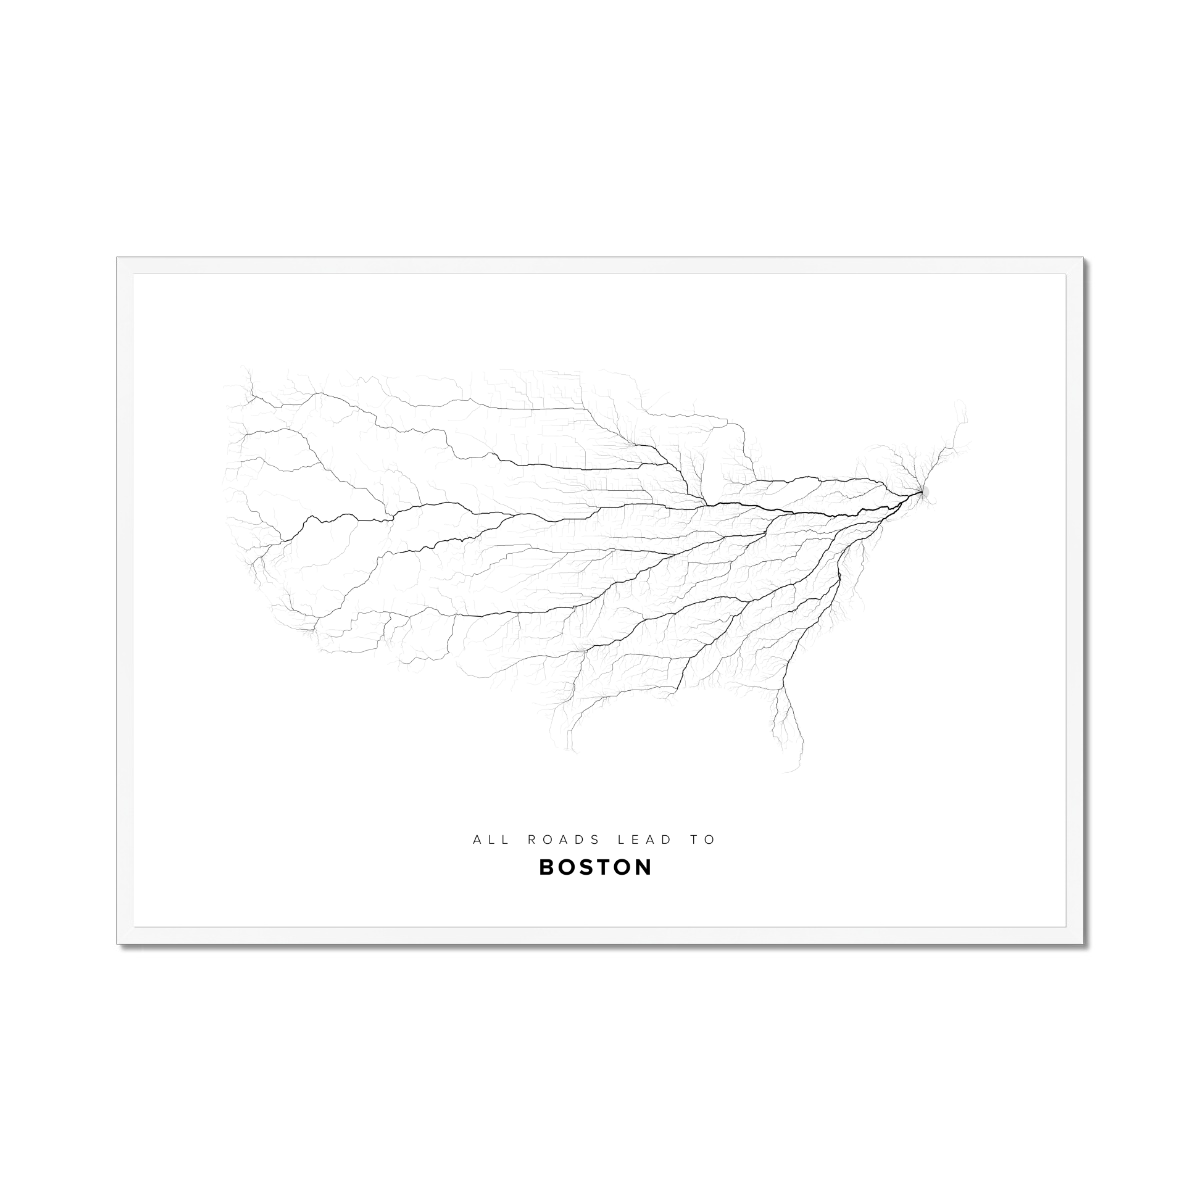 All roads lead to Boston (United States of America) Fine Art Map Print